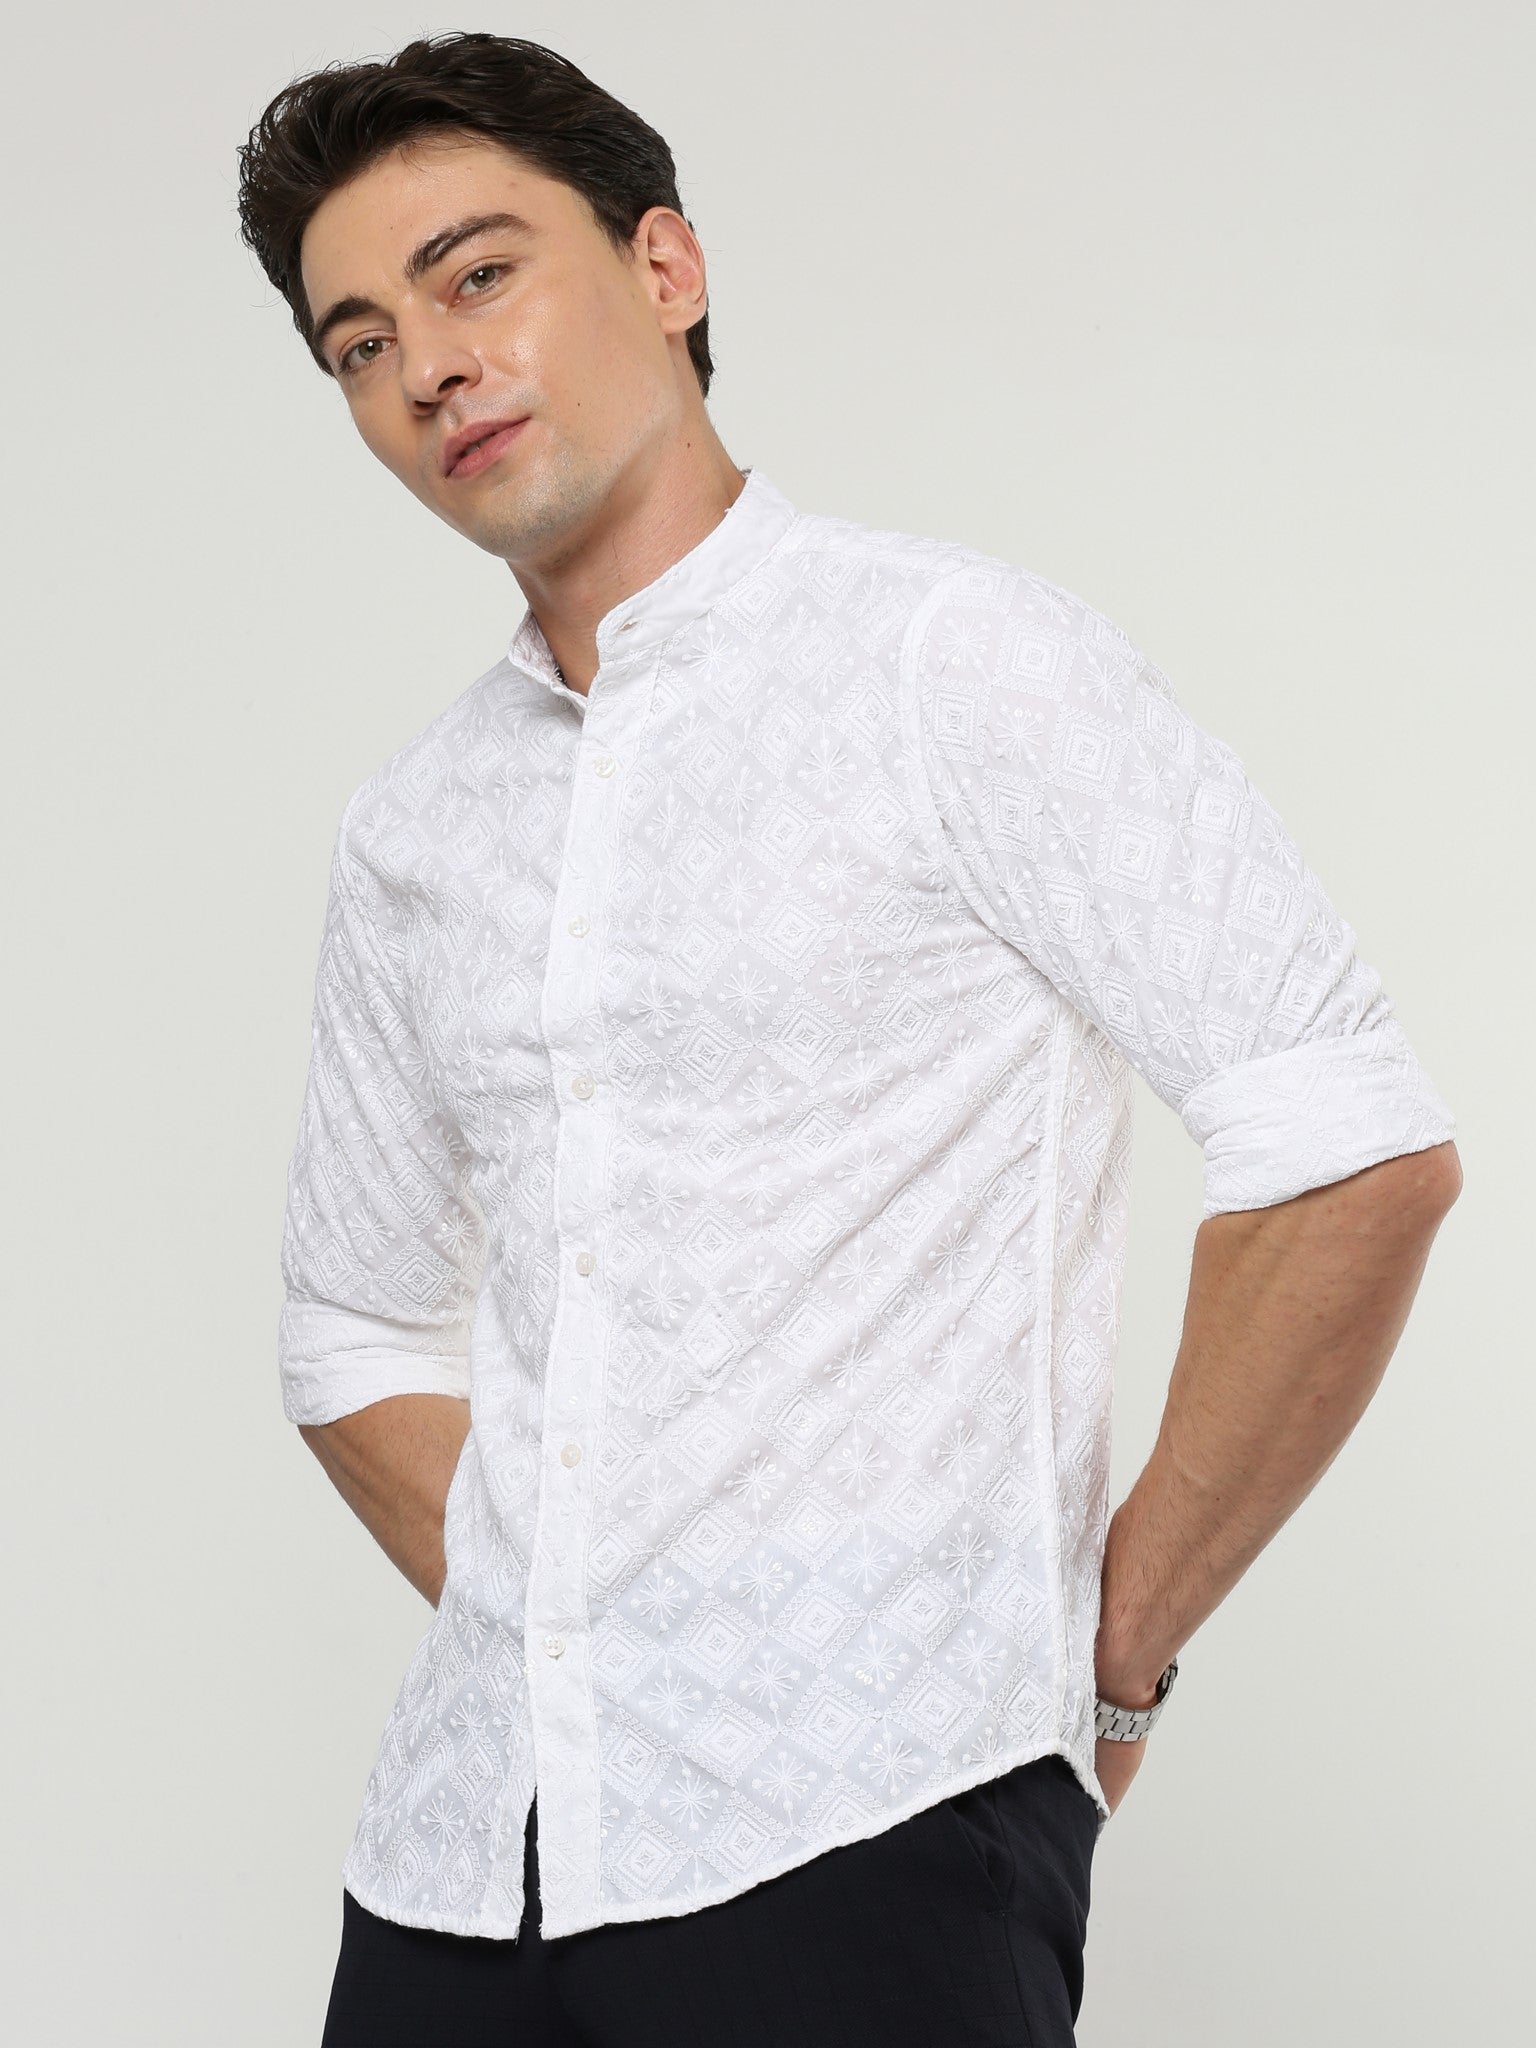 Diamond Embroidered White Shirt